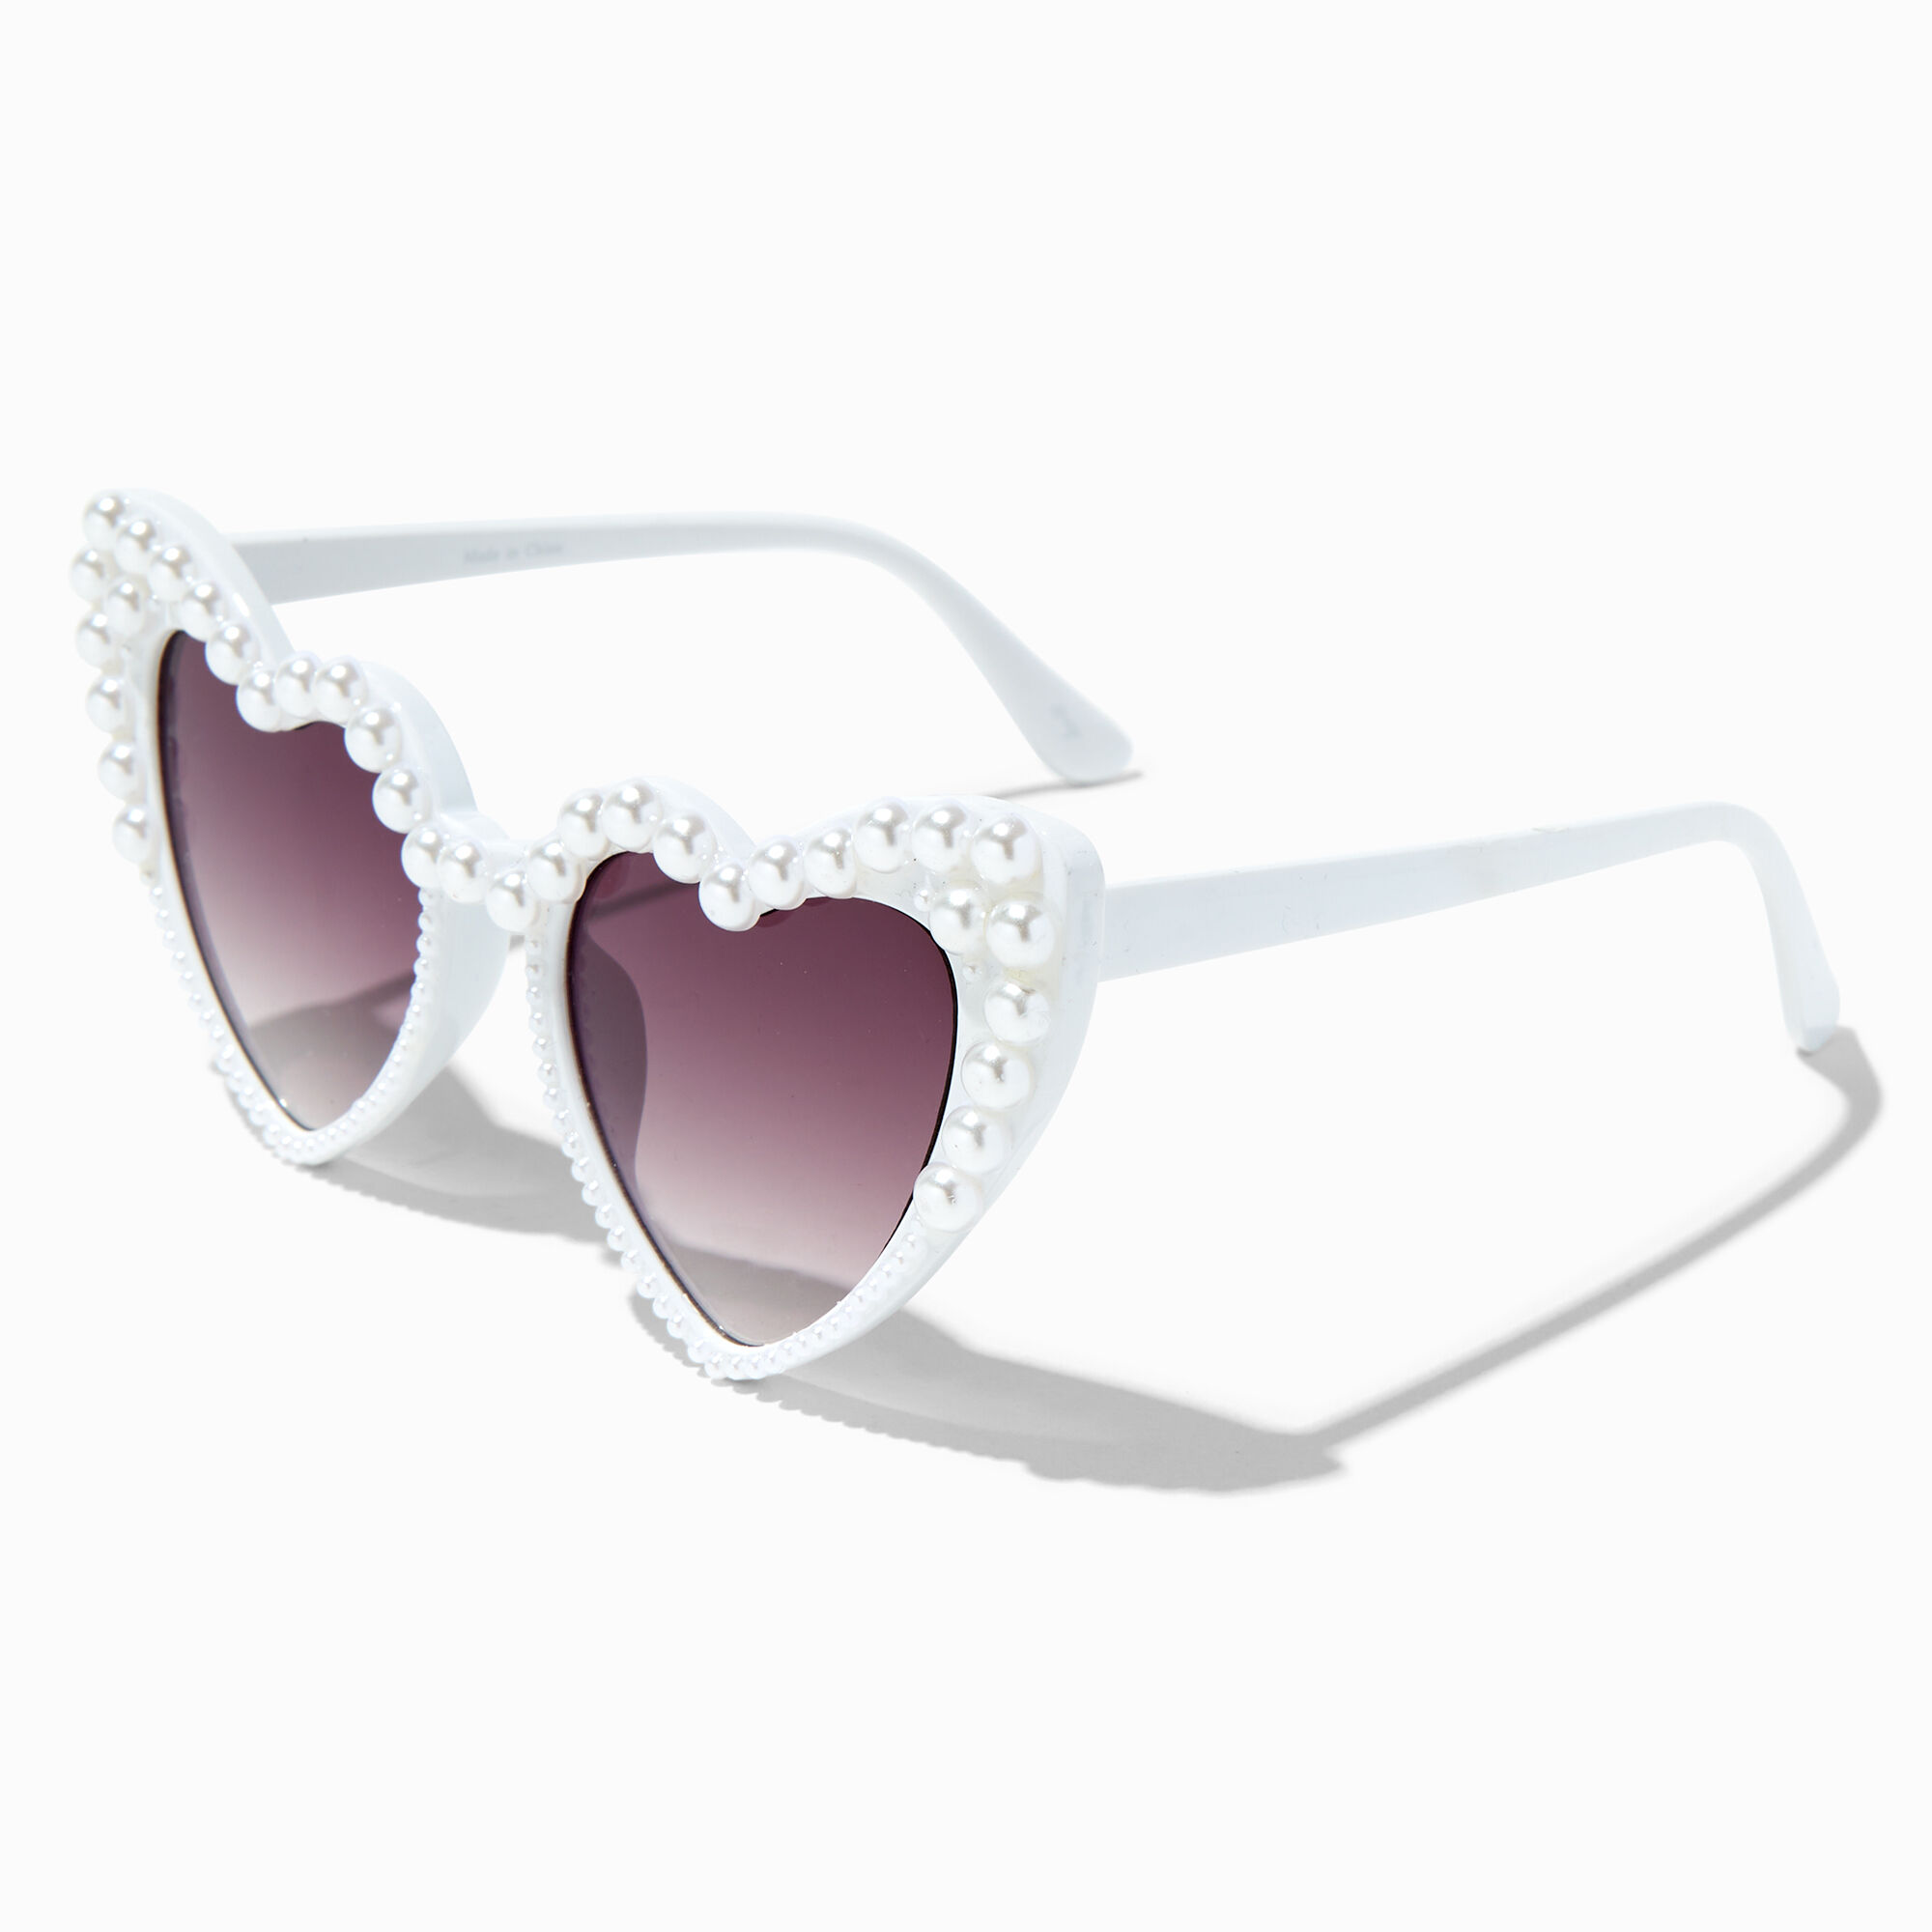 Girls Child Size Heart Shape Cute Plastic Fashion Sunglasses Flower Pink -  Walmart.com